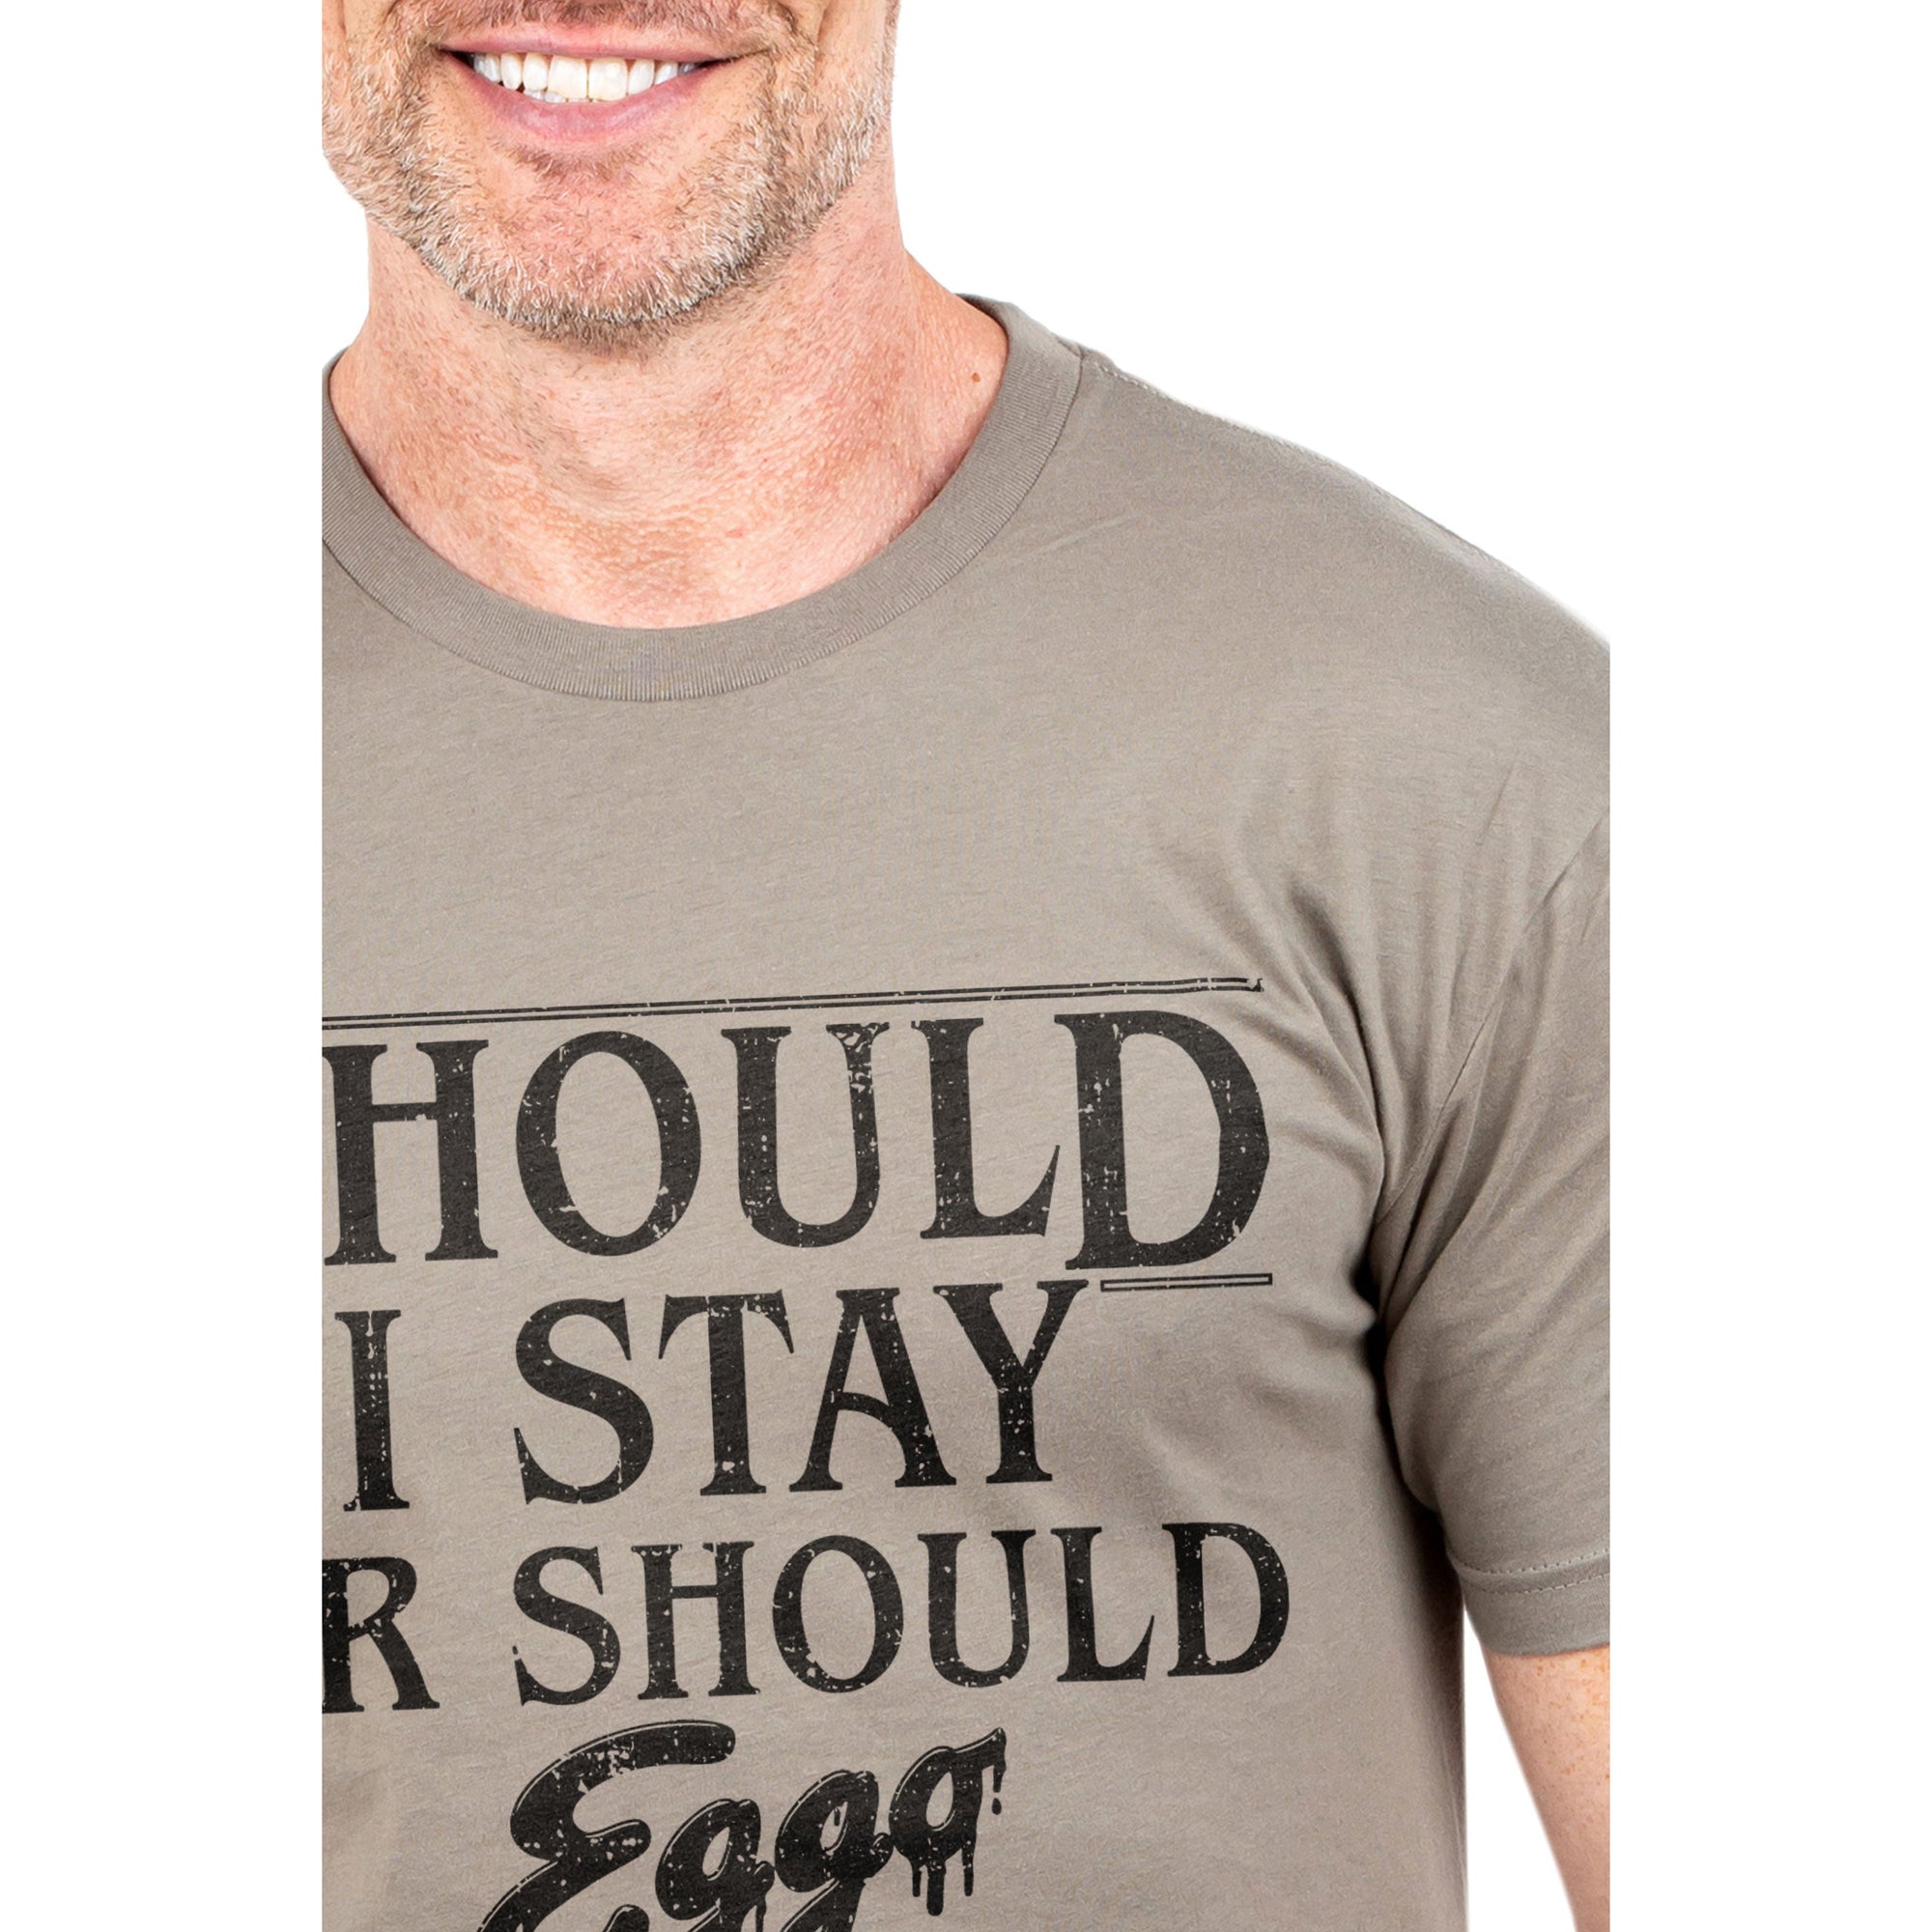 Should I Stay Or Should Eggo Printed Graphic Men's Crew T-Shirt Heather Tan Closeup Image